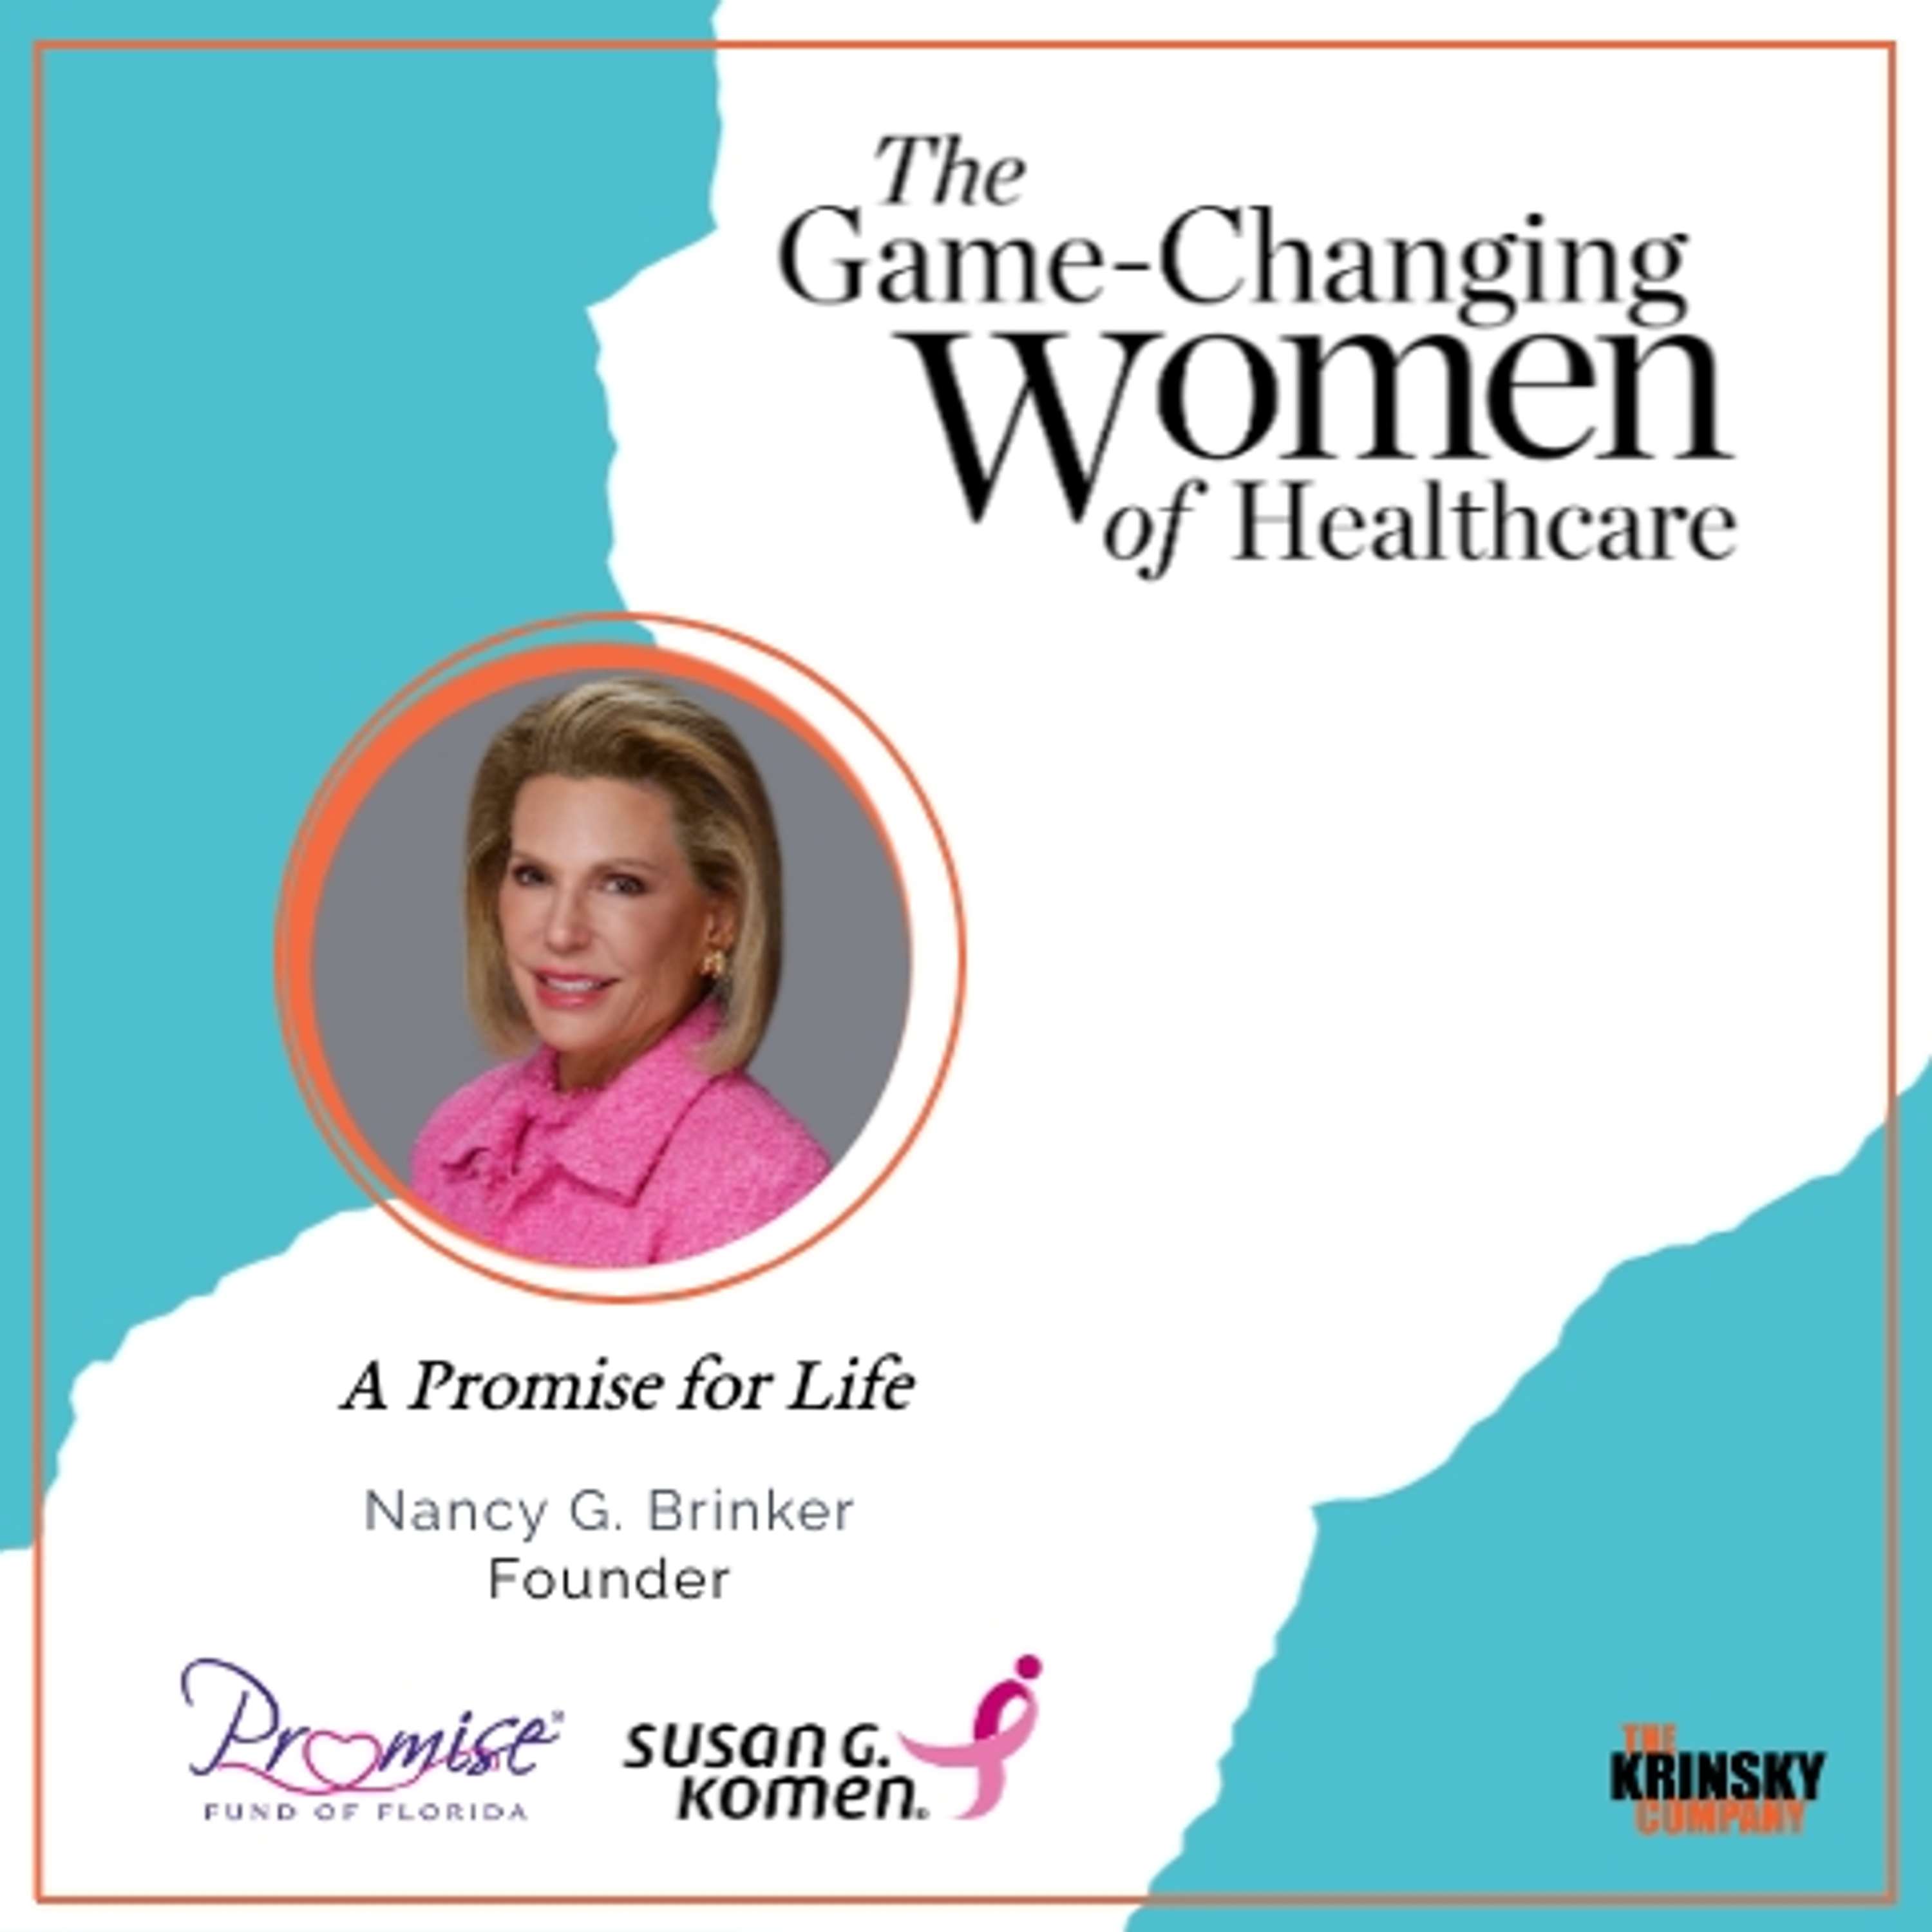 Nancy G. Brinker: A Promise for Life